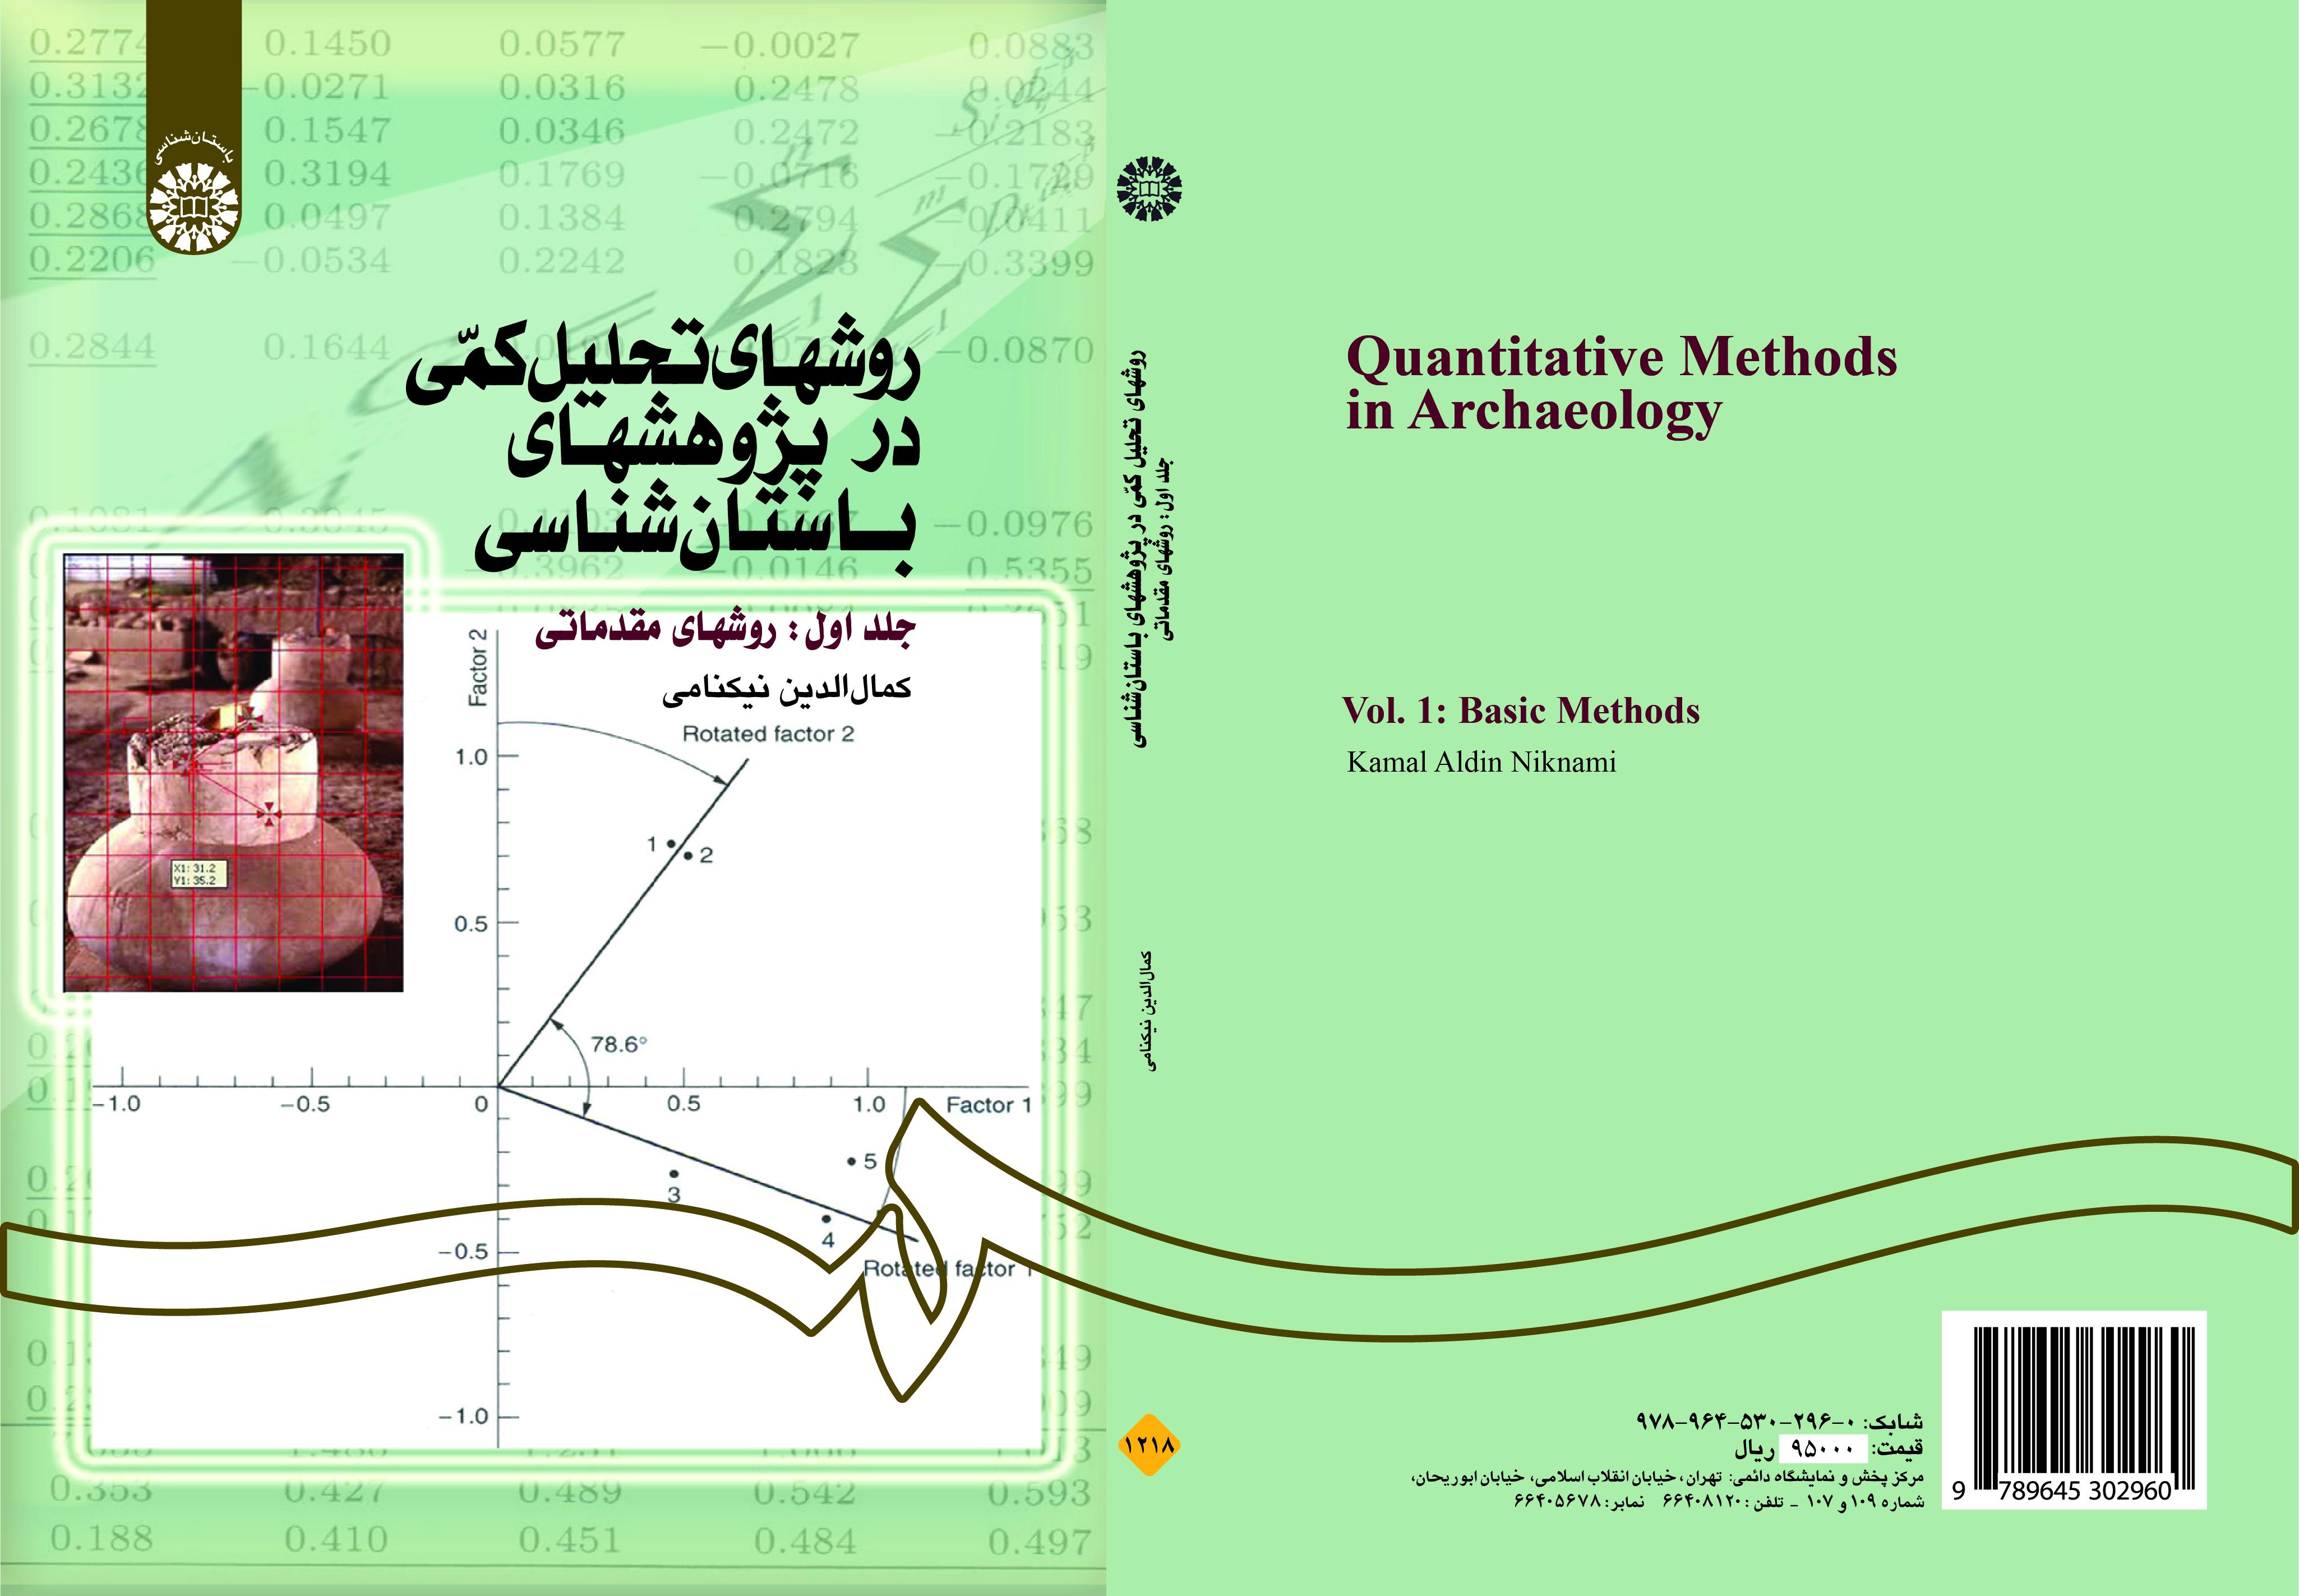 Quantitative Methods in Archaeological Researches (Vol.I): Basic Methods)